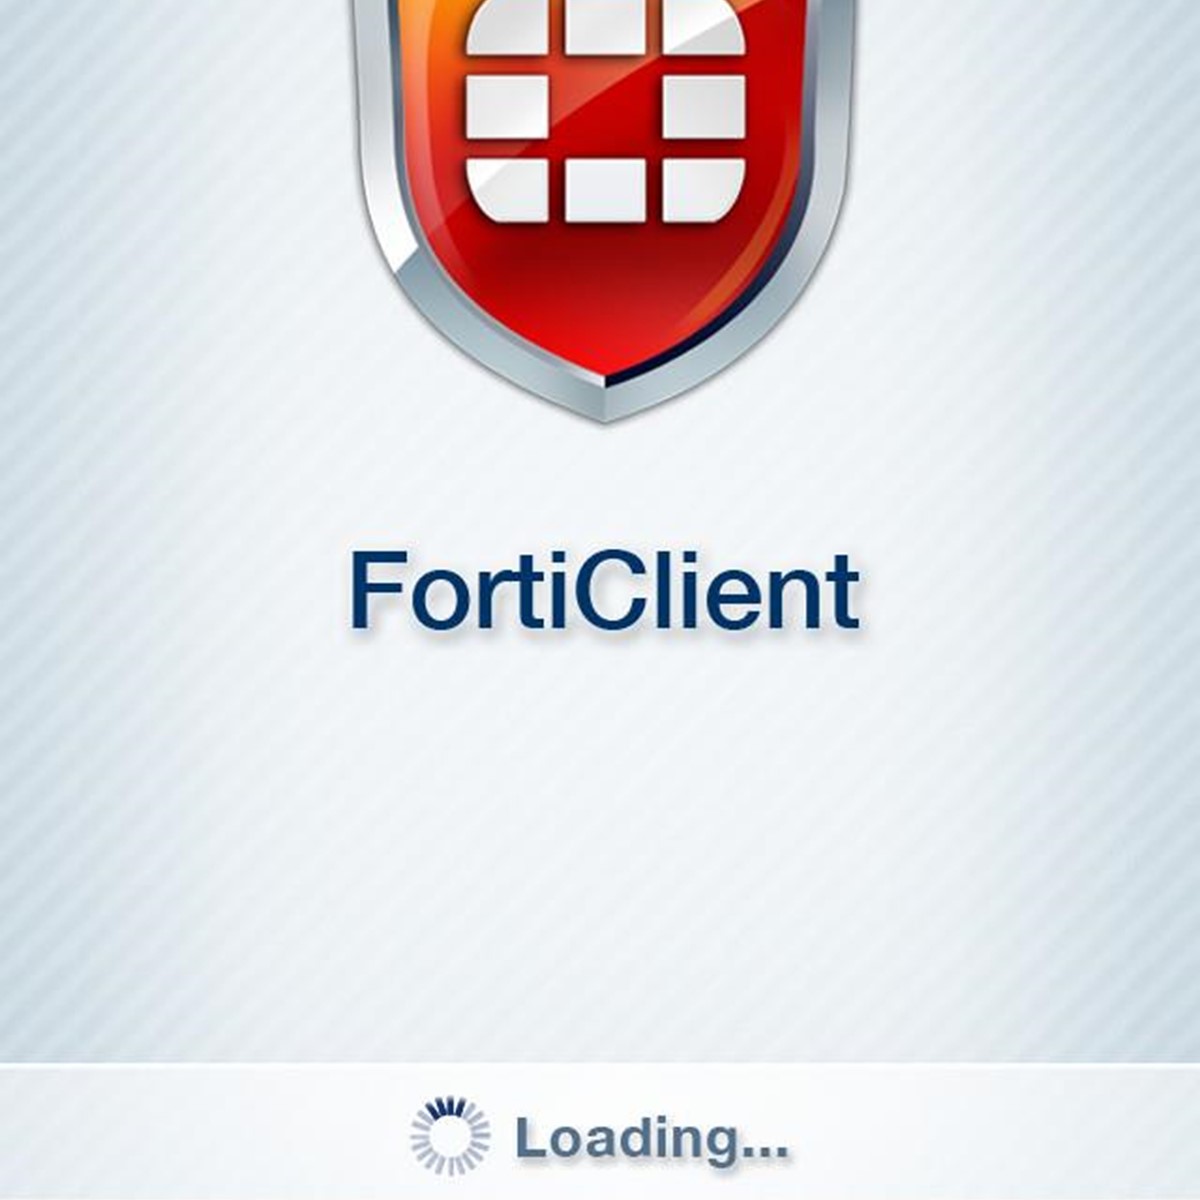 Forticlient ssl vpn for mac 4.0 download